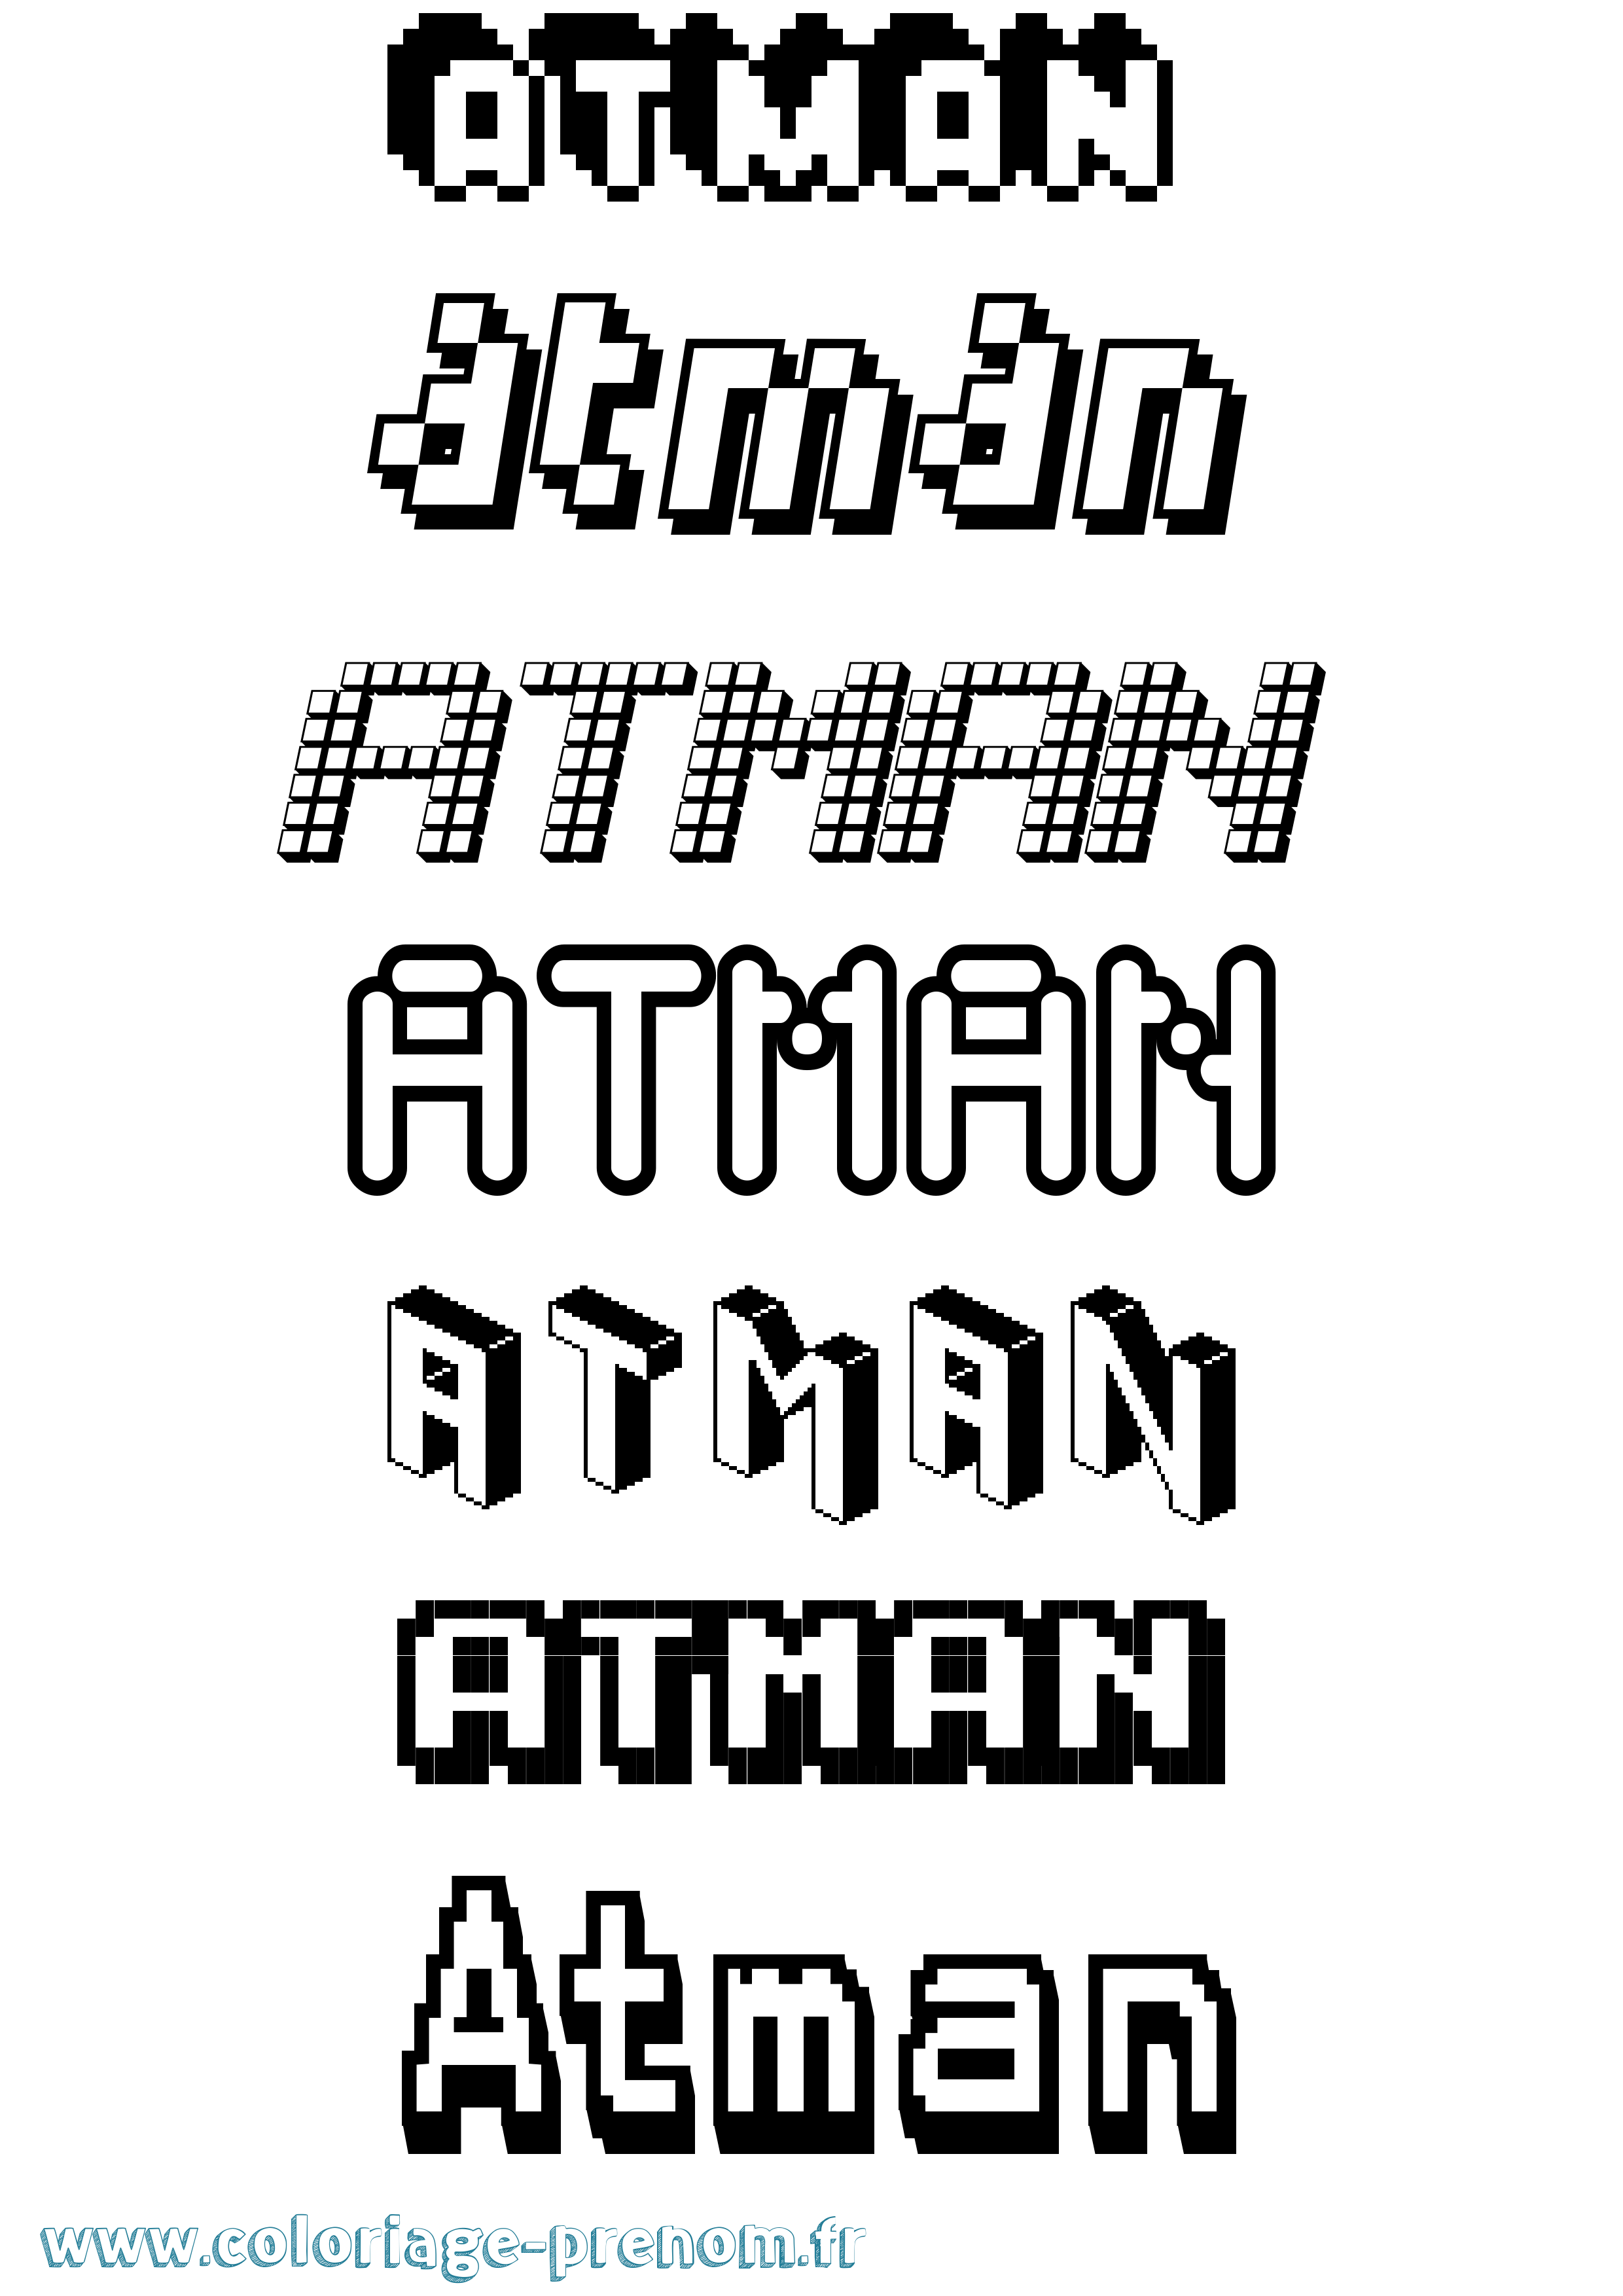 Coloriage prénom Atman Pixel